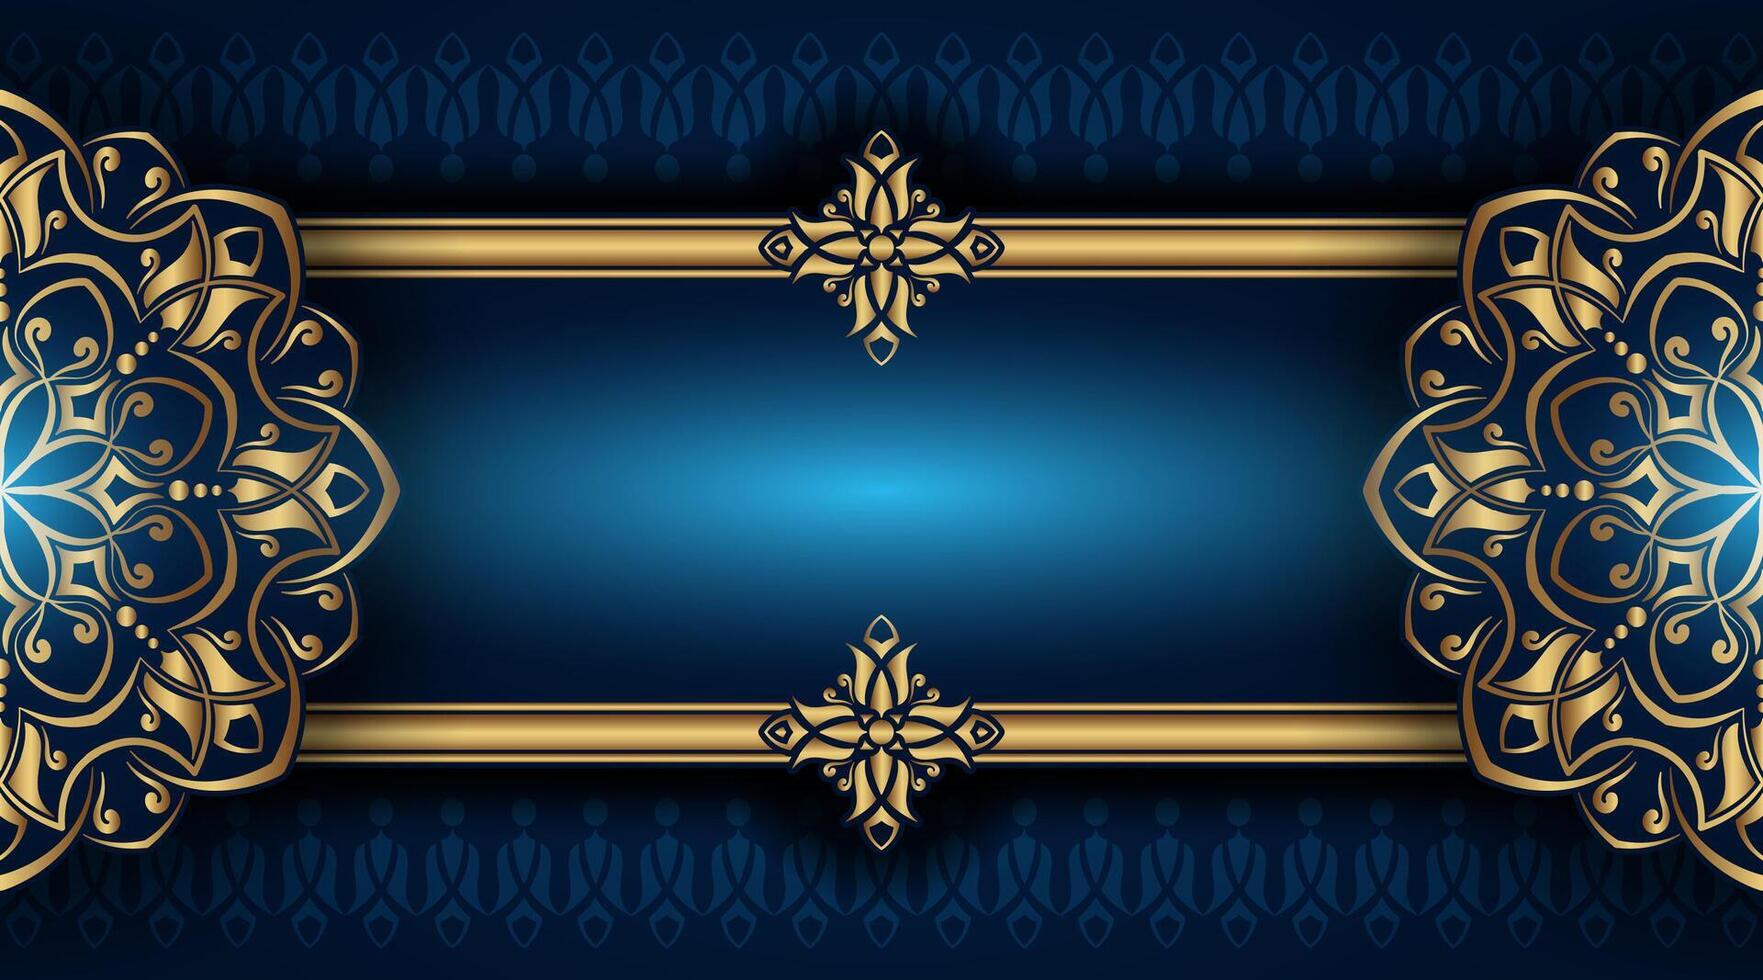 Dark blue ornamental background, with gold mandala decoration vector